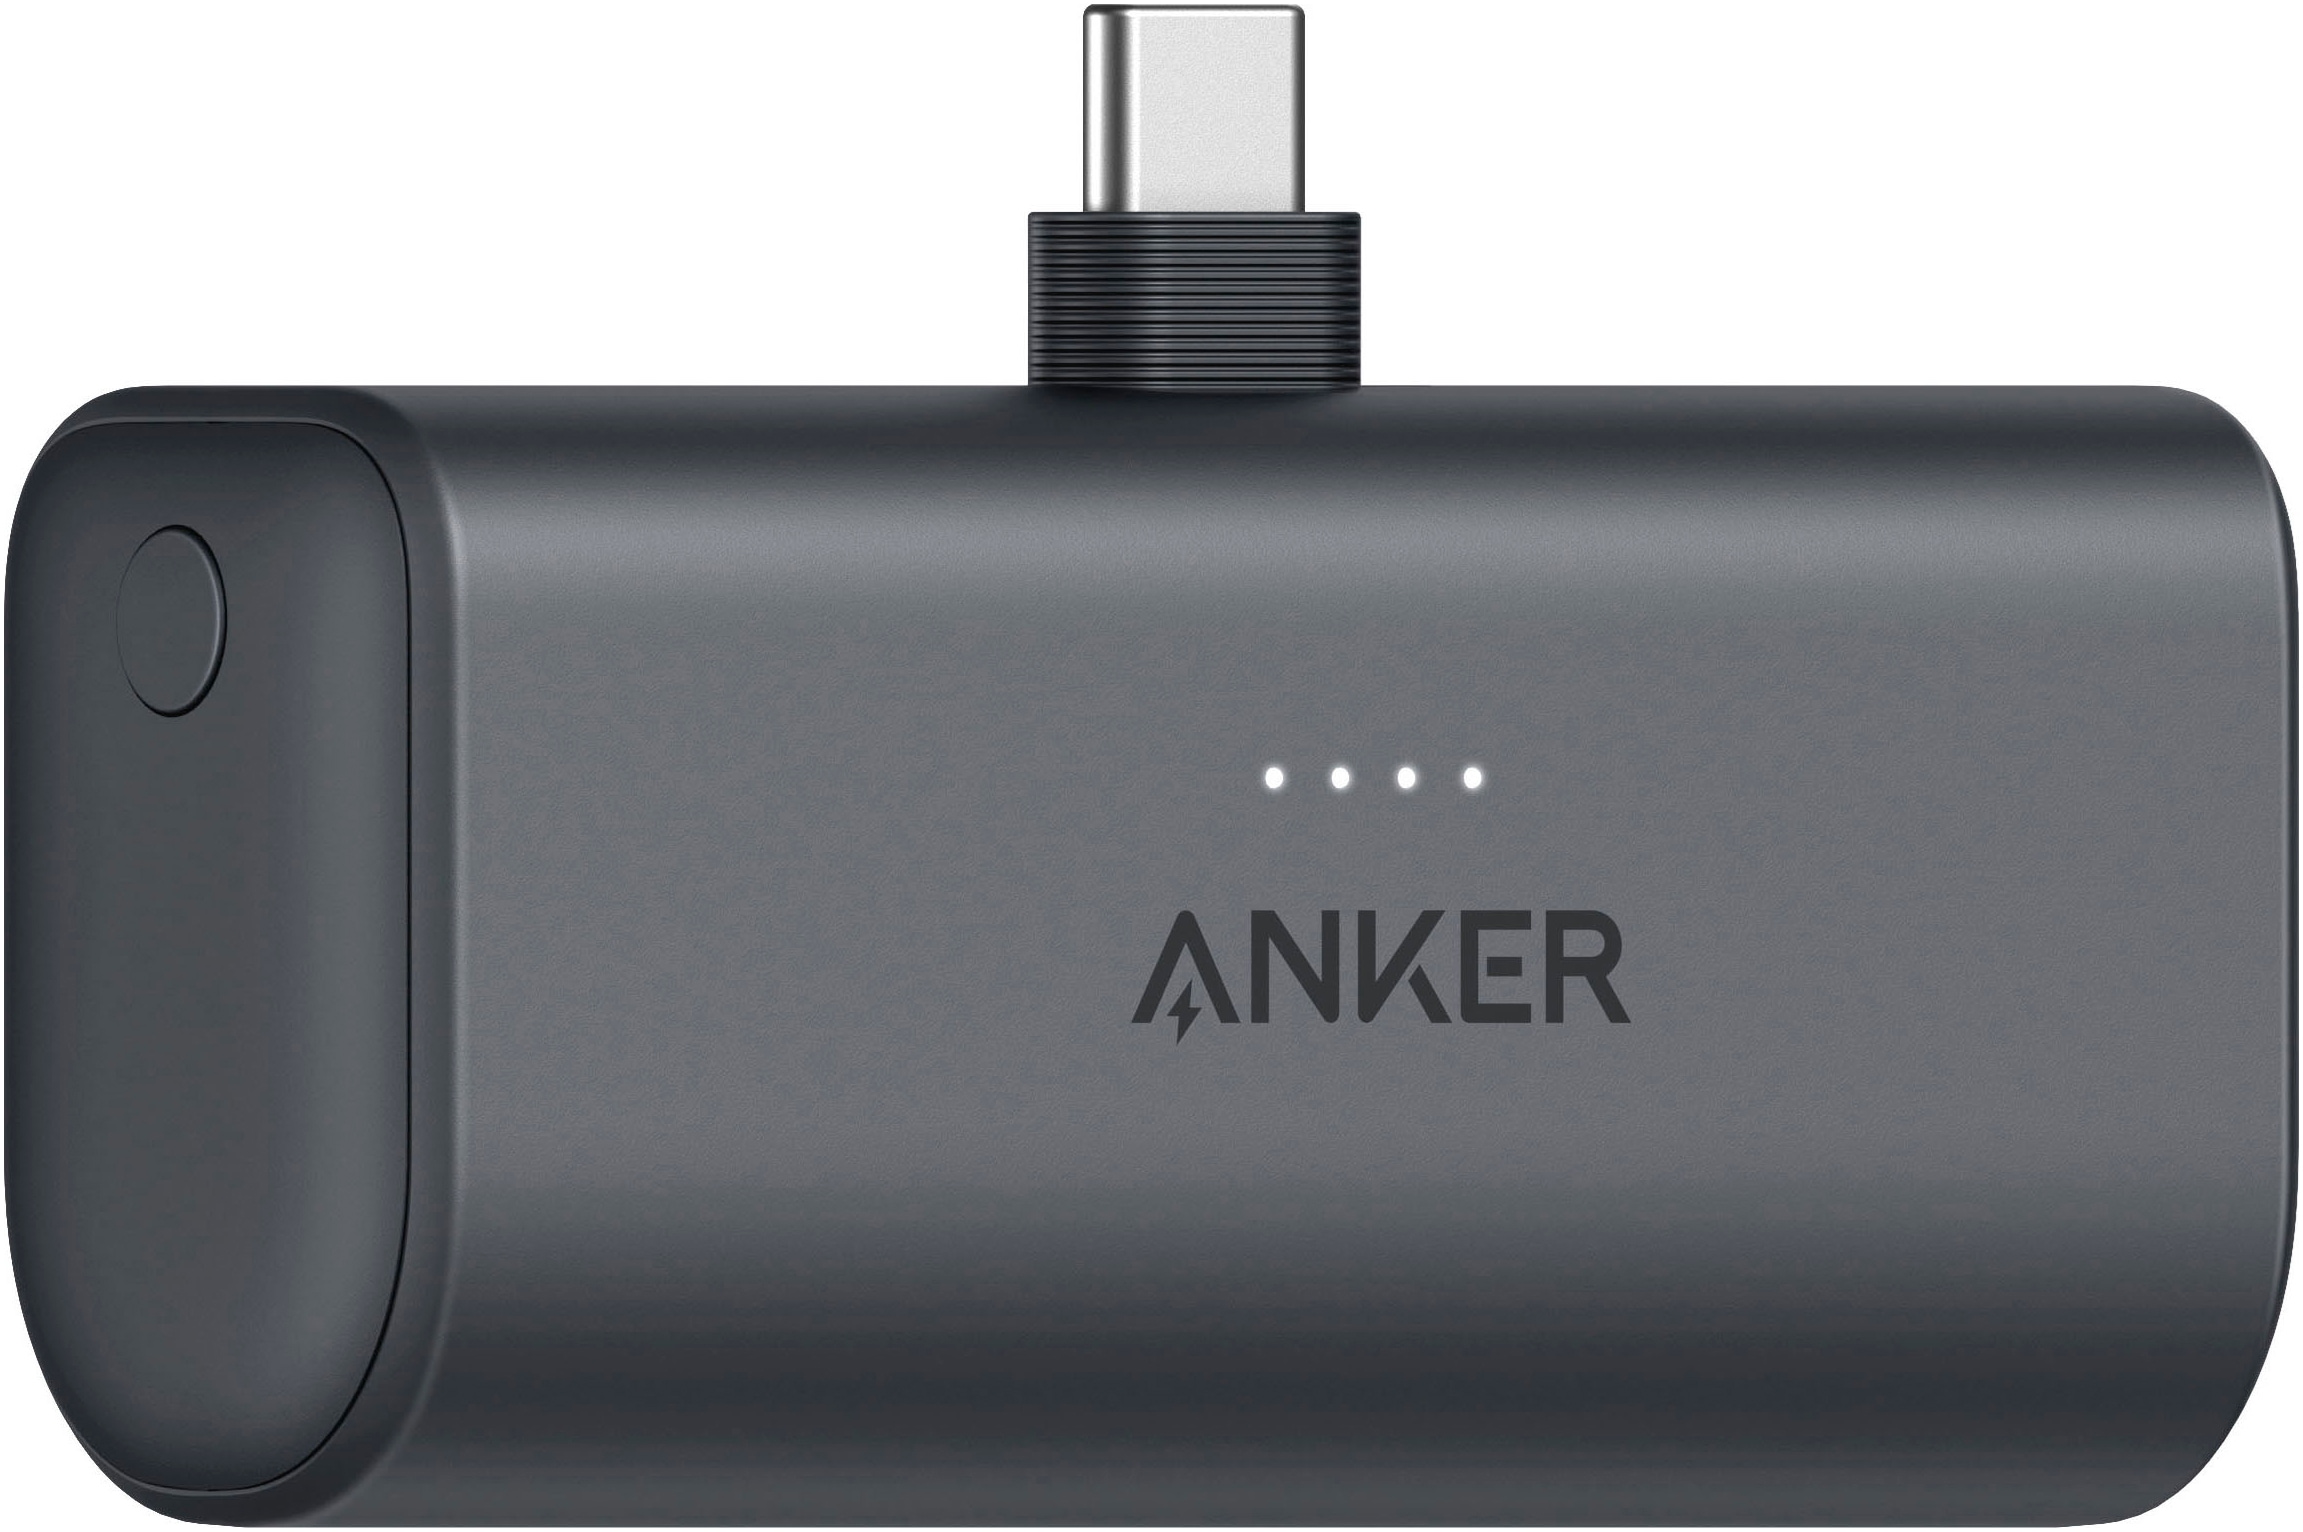 Anker Powerbank »Nano«, 5000 mAh